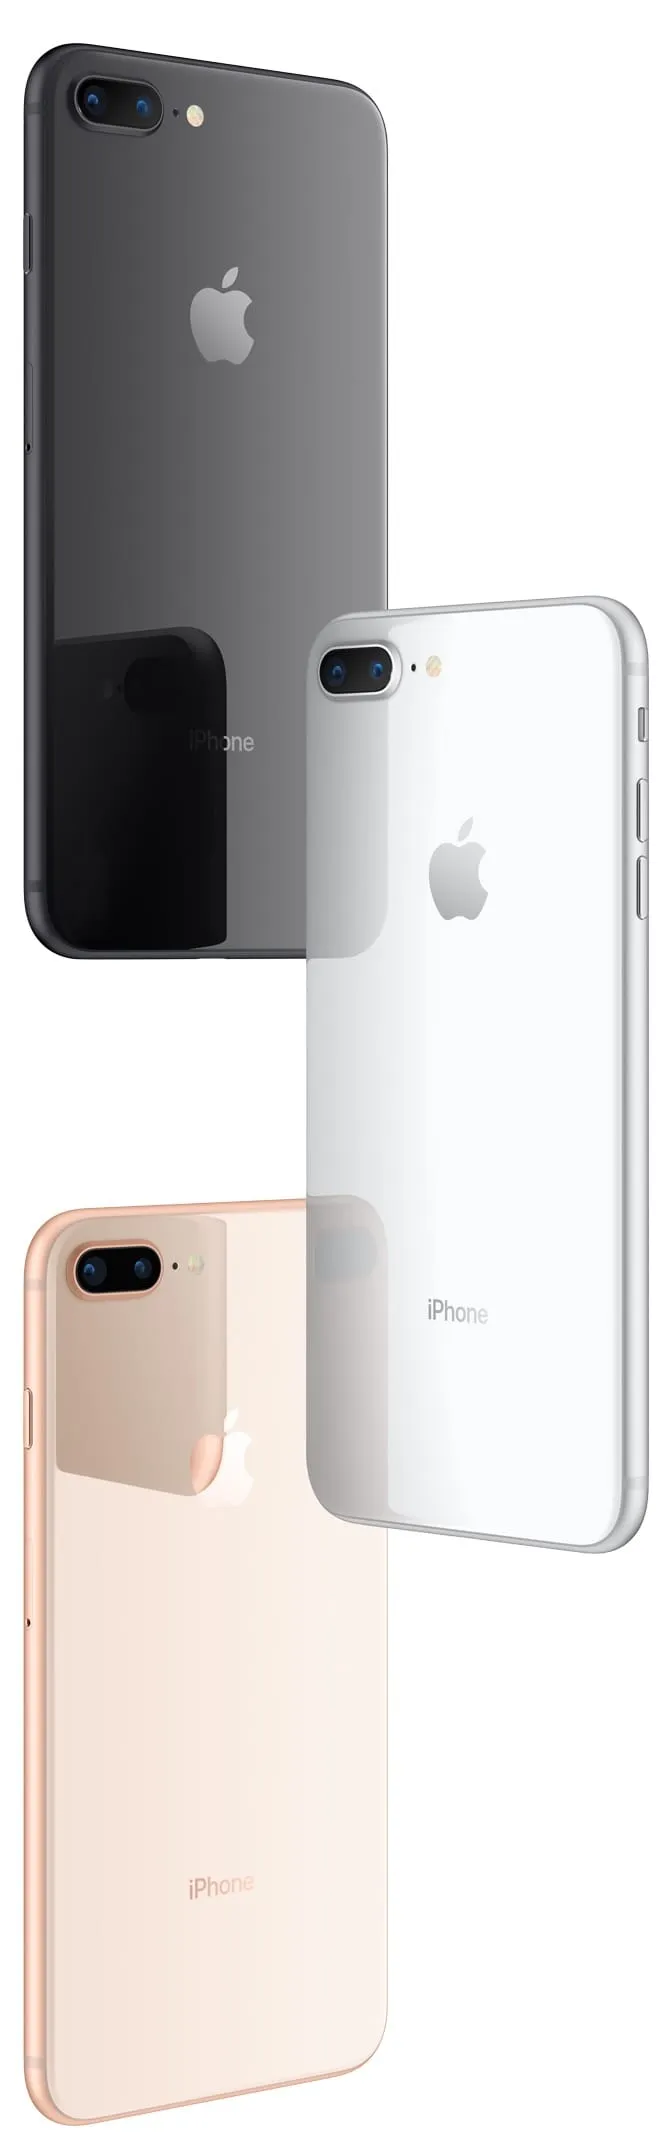 Дизайн iPhone 8 и iPhone 8Plus